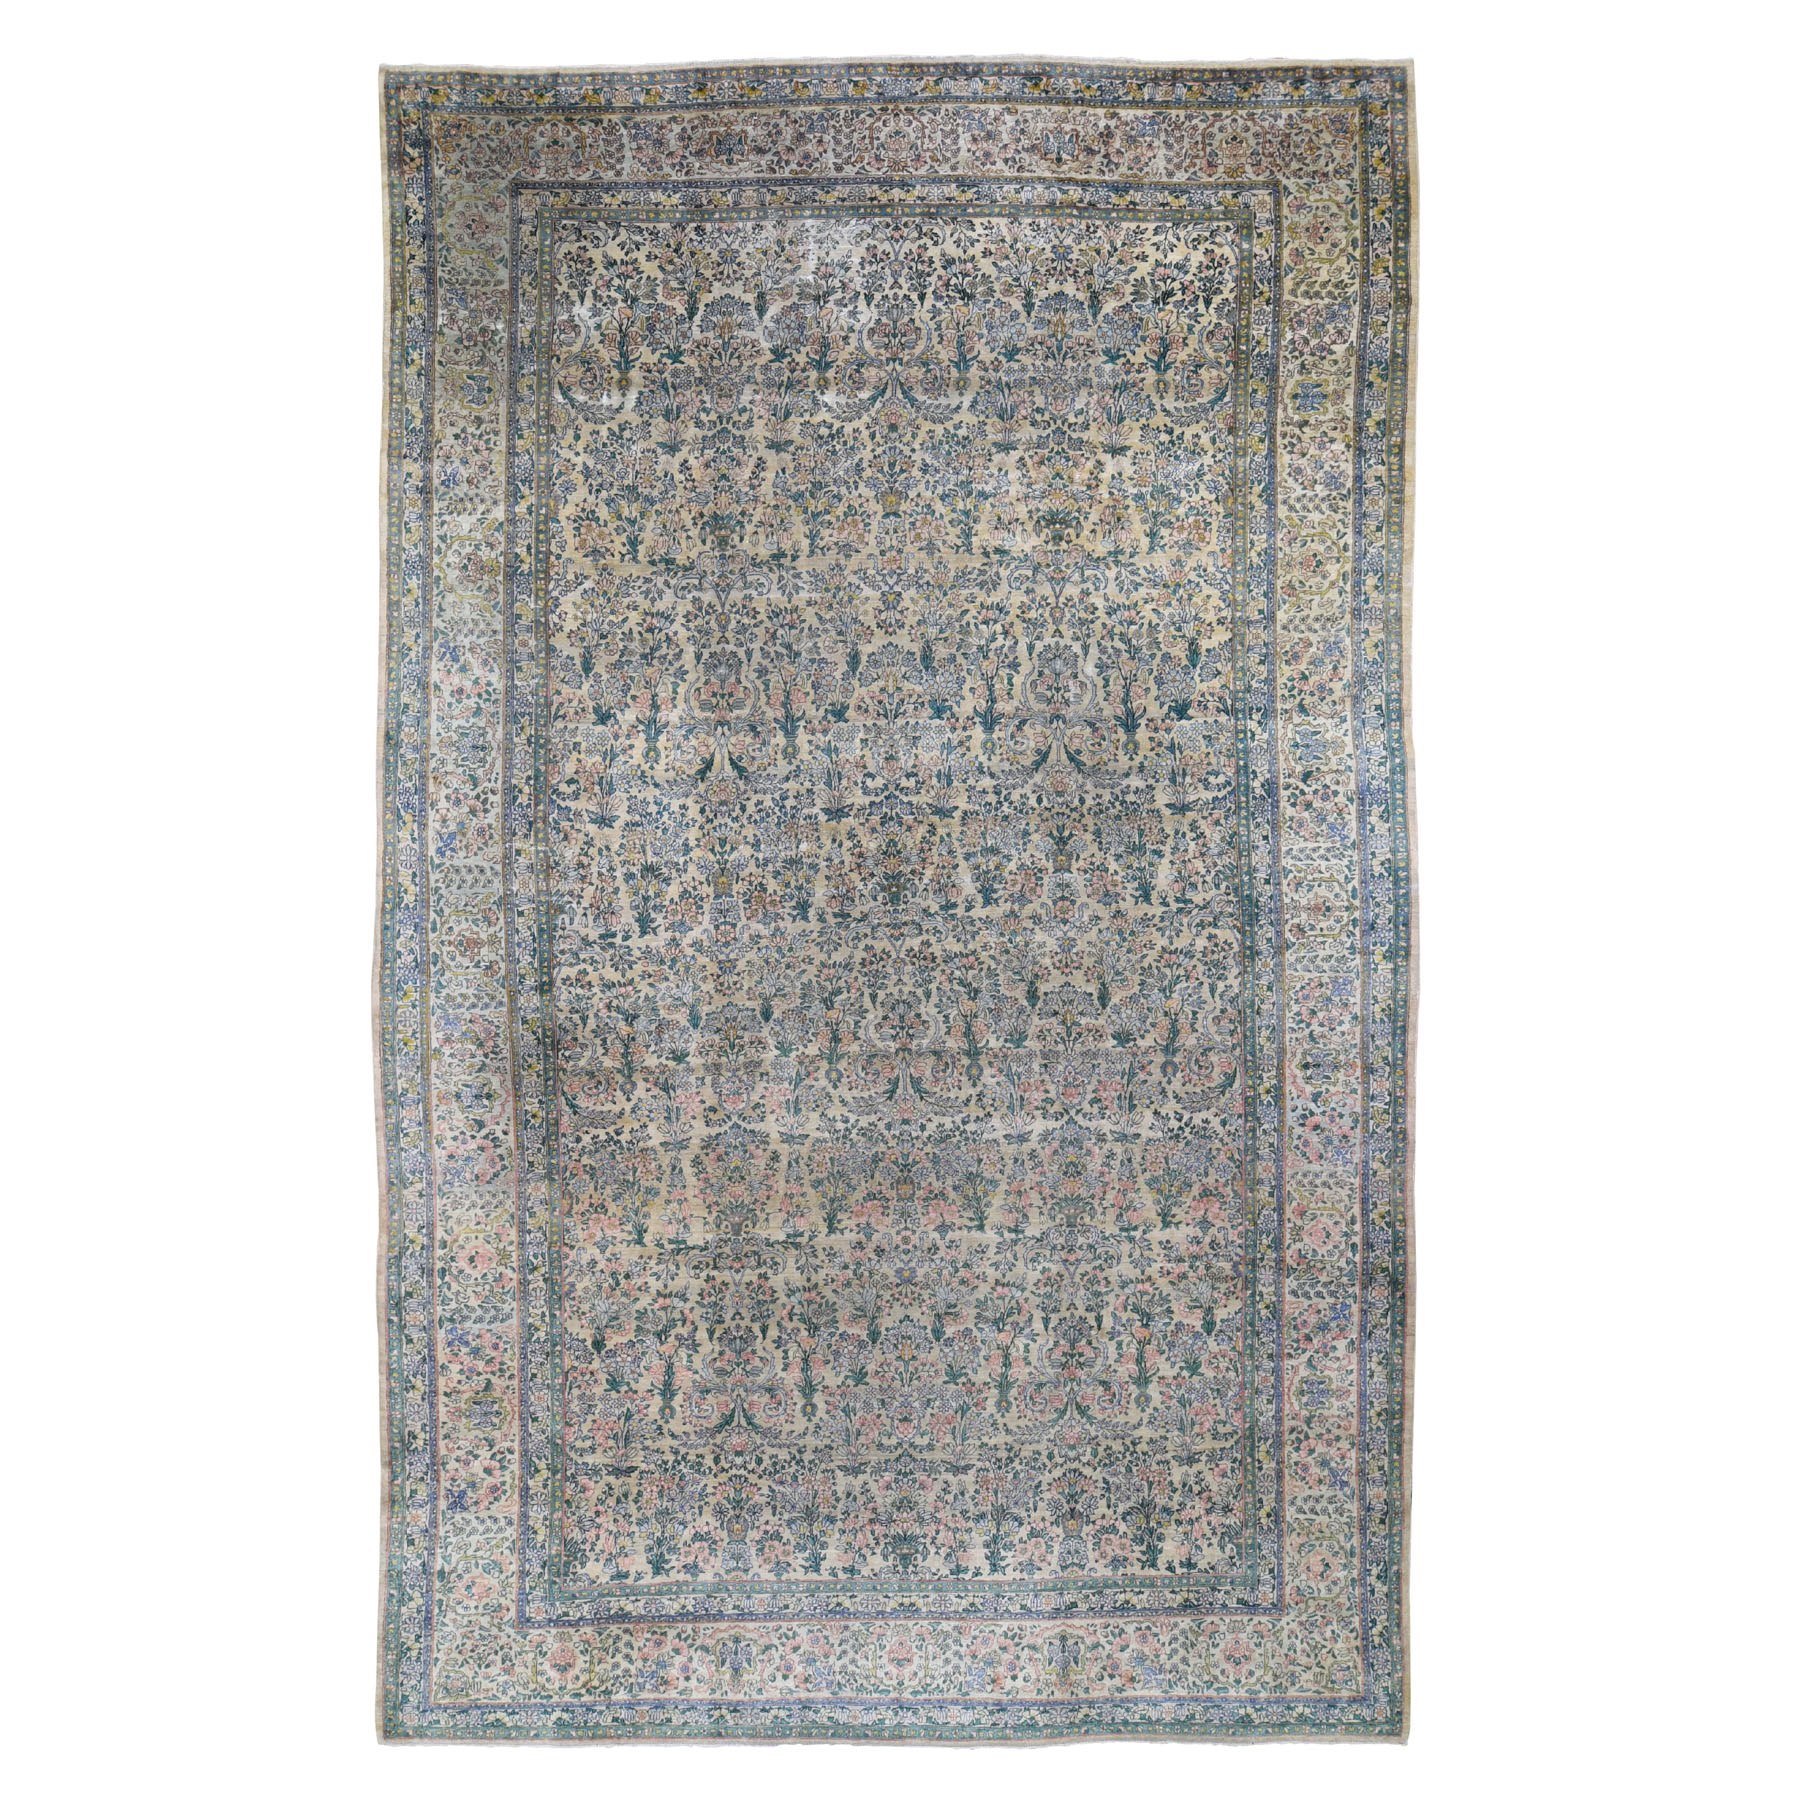 9'x16' Gallery Size Antique Persian Kerman Some Wear Hand Woven Oriental Rug 